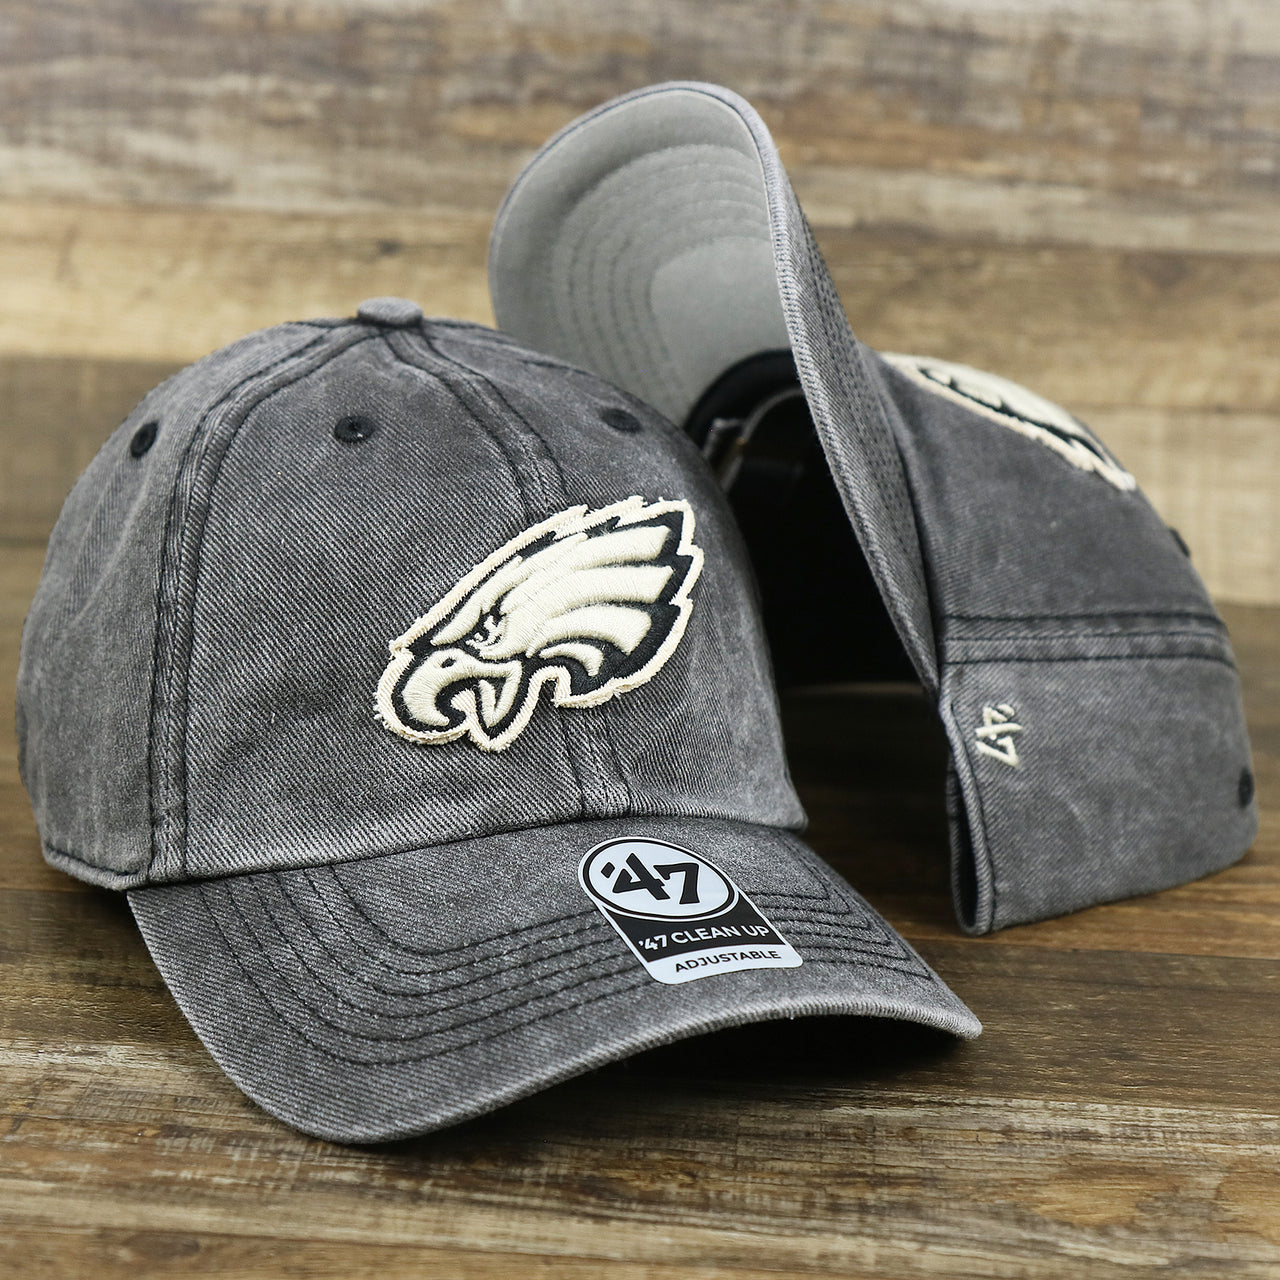 The Philadelphia Eagles Worn Dark Gray Dad Hat | Worn Dark Gray Dad Hat